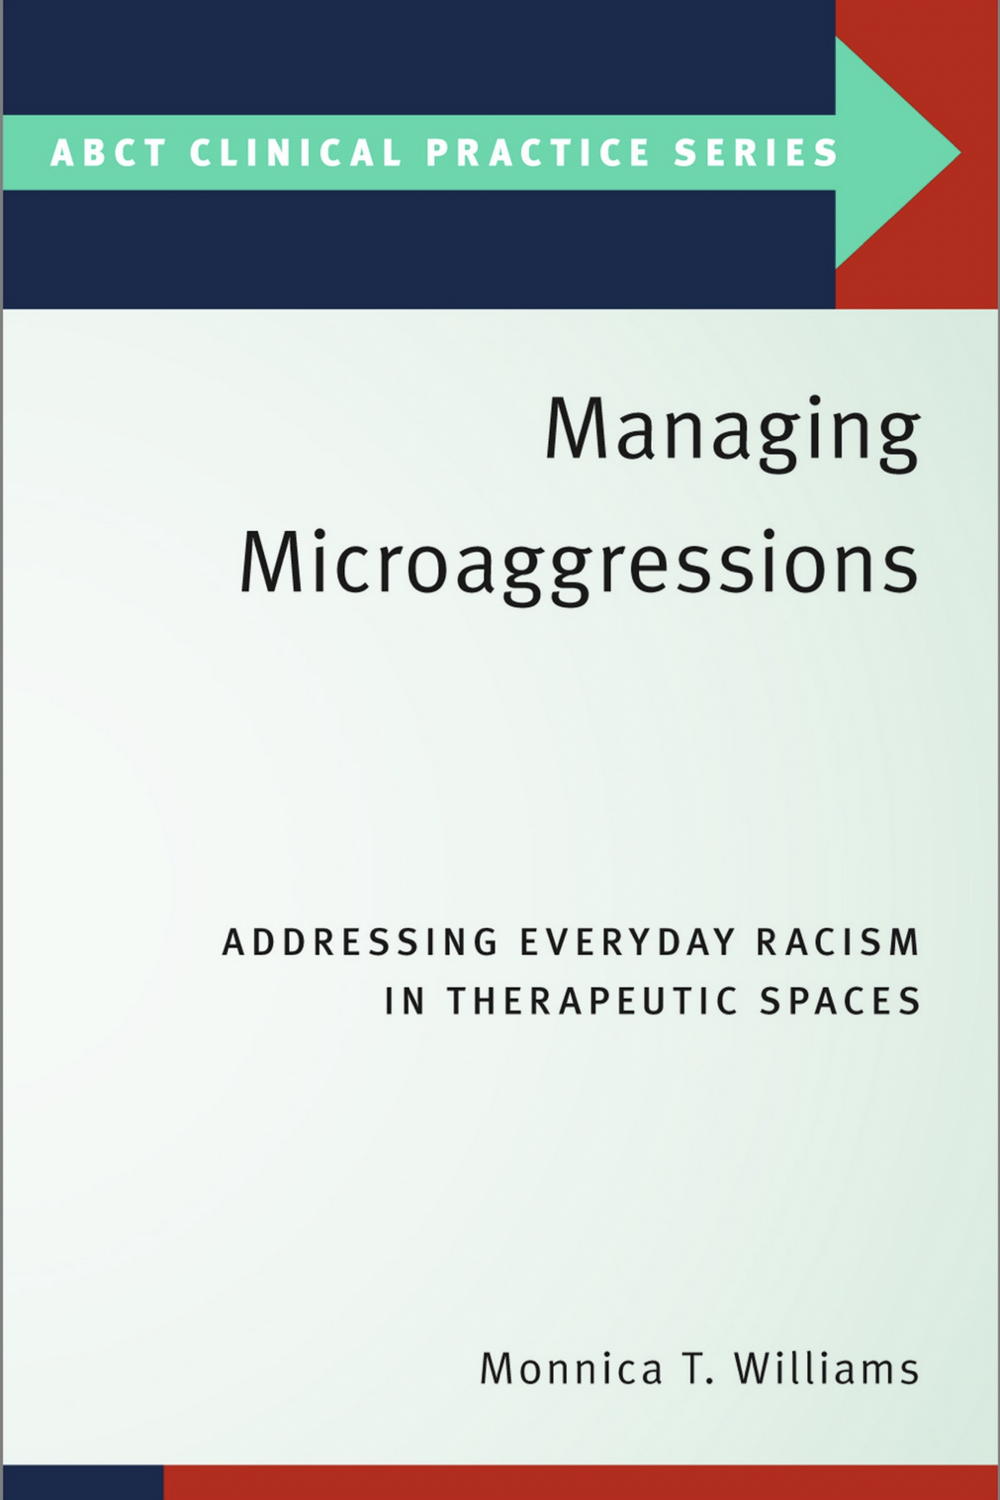 book - Managing Microaggressions